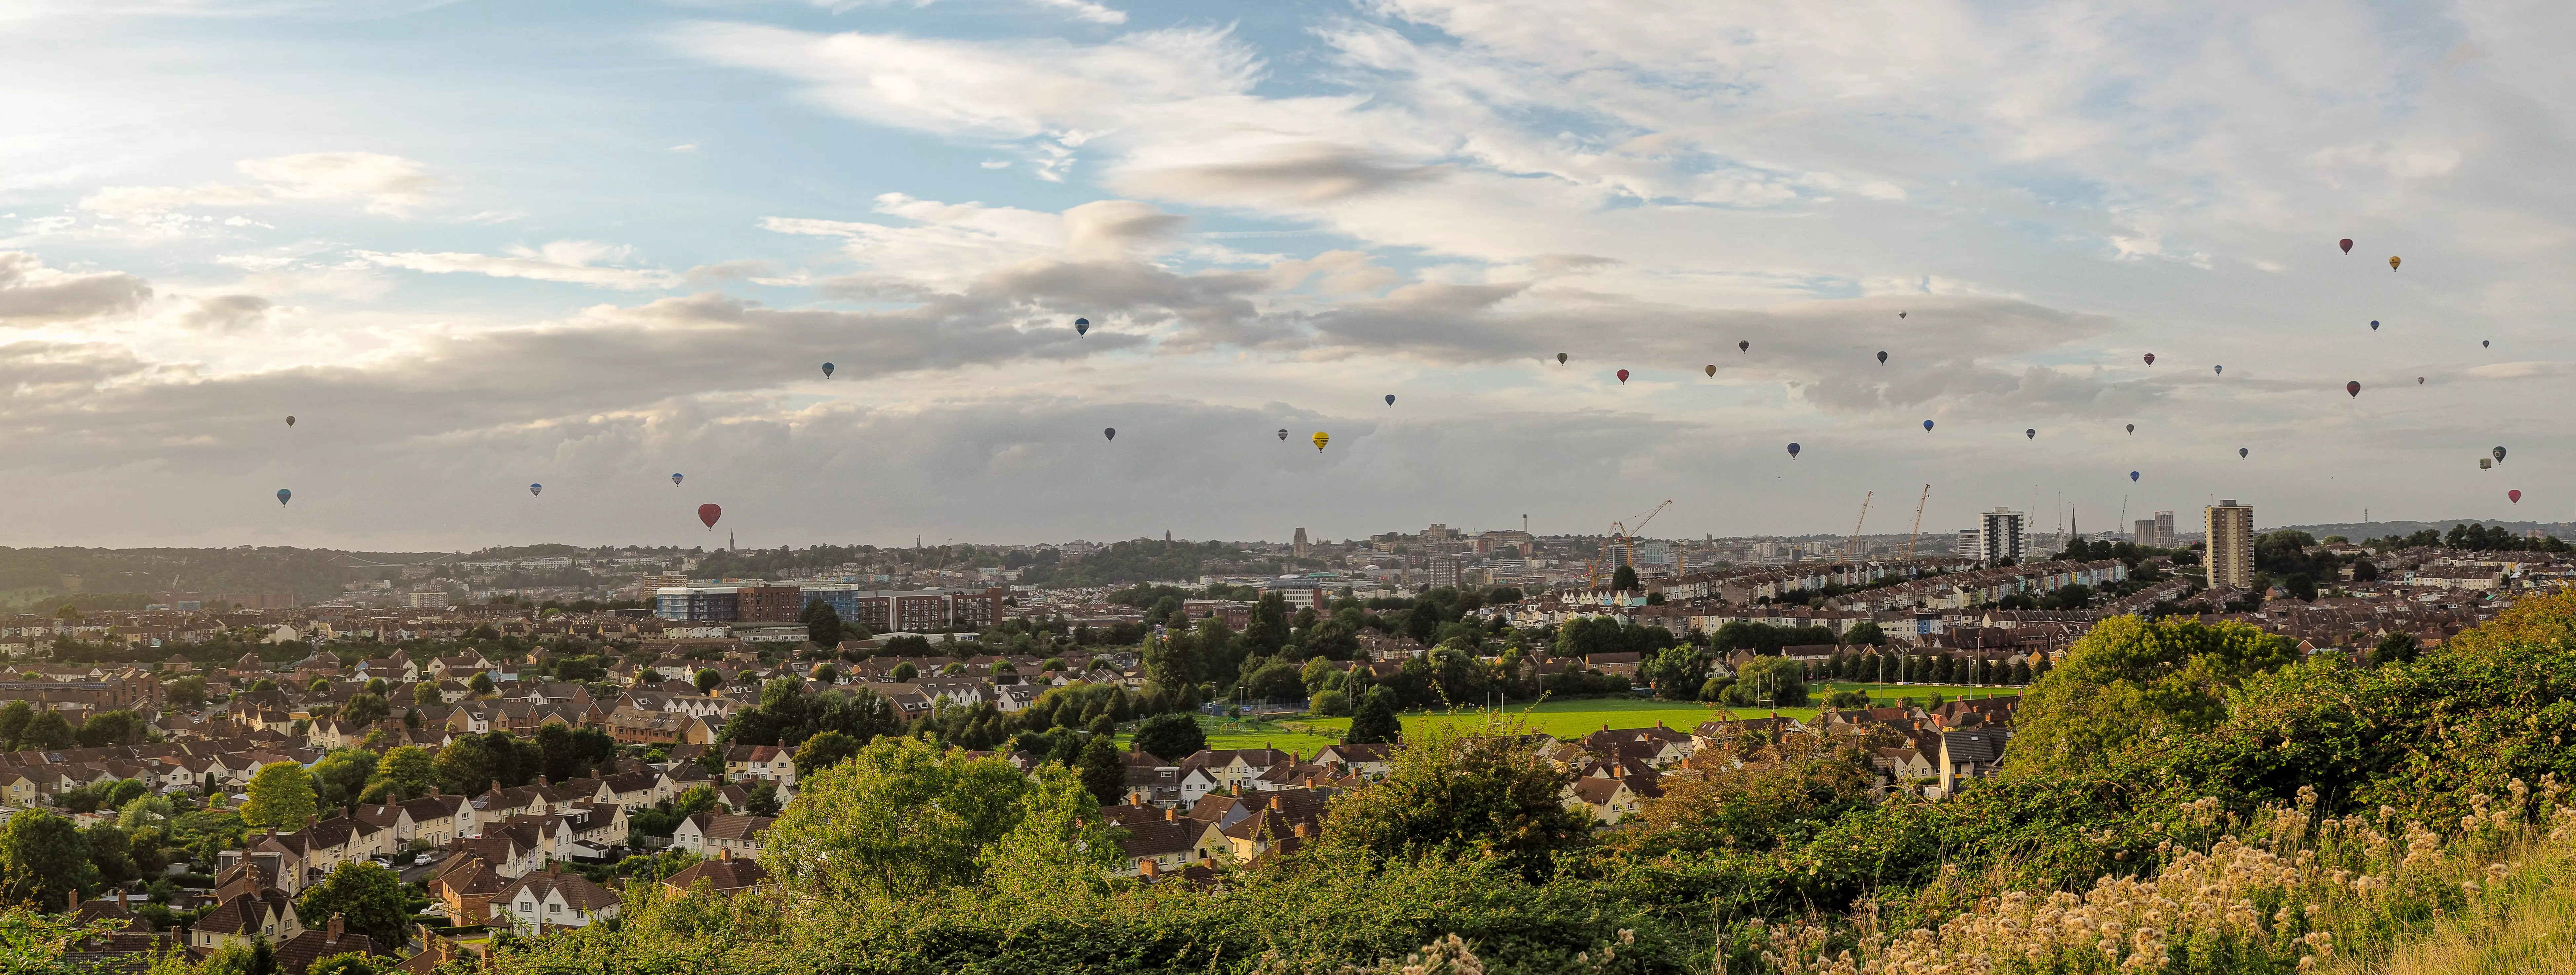 A photo of hot air balloons above Bristol